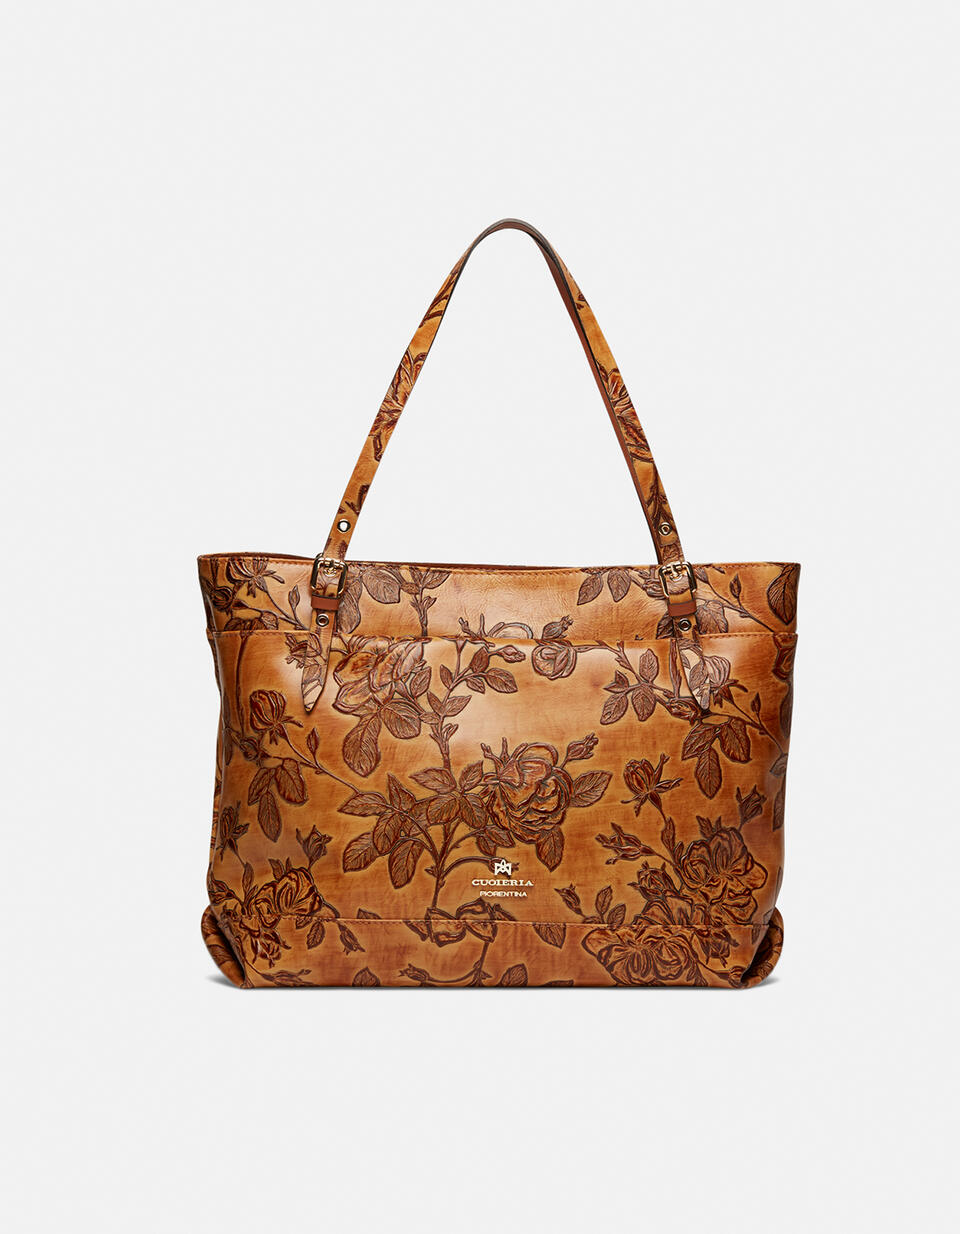 Big shopping bag keystone design - SHOPPING - WOMEN'S BAGS | bags  - SHOPPING - WOMEN'S BAGS | bagsCuoieria Fiorentina